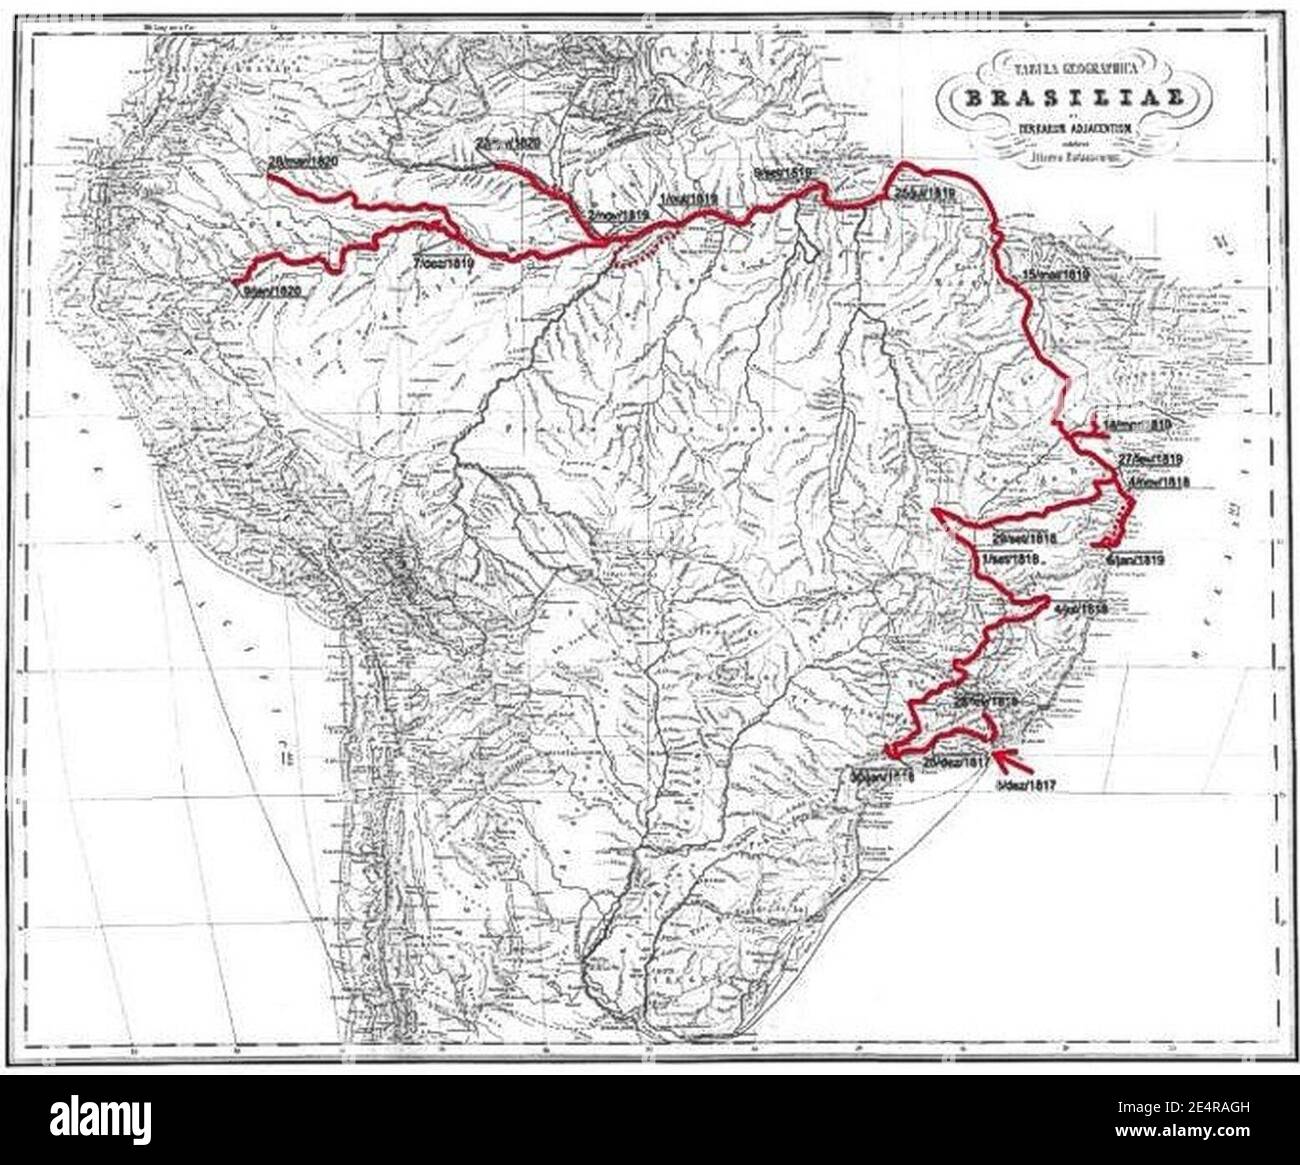 Ruta Martius y Spix en Brasil 1817-1820. Foto de stock